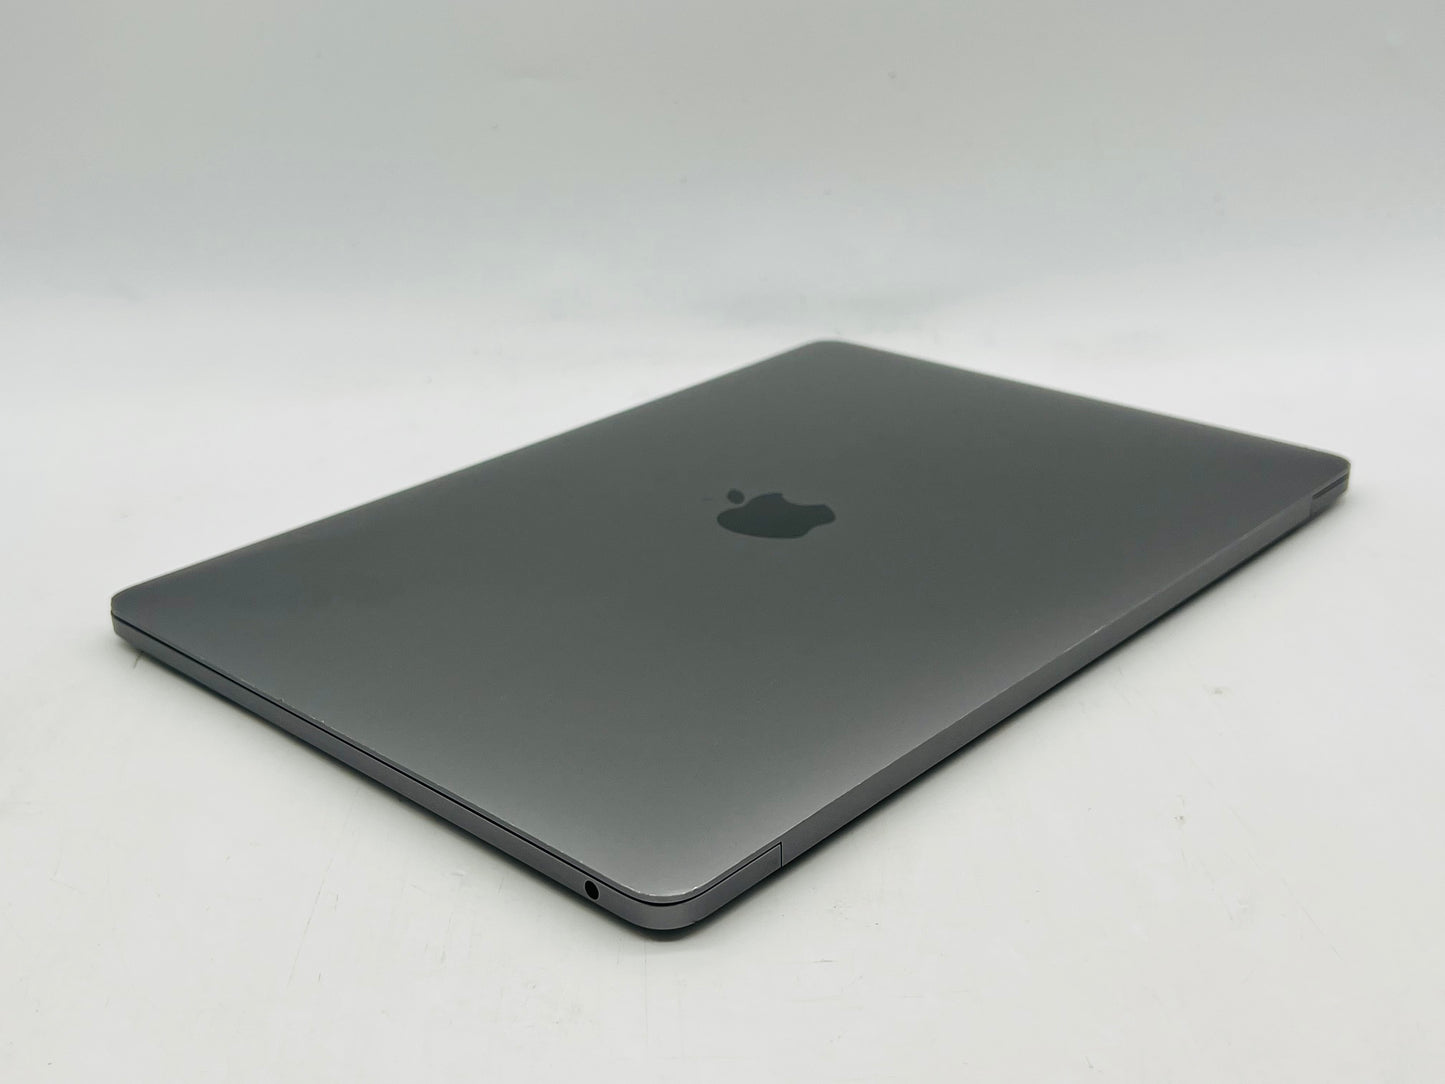 Apple 2019 MacBook Pro 13 in TB 1.4GHz Quad-Core i5 8GB RAM 128GB SSD IIPG645